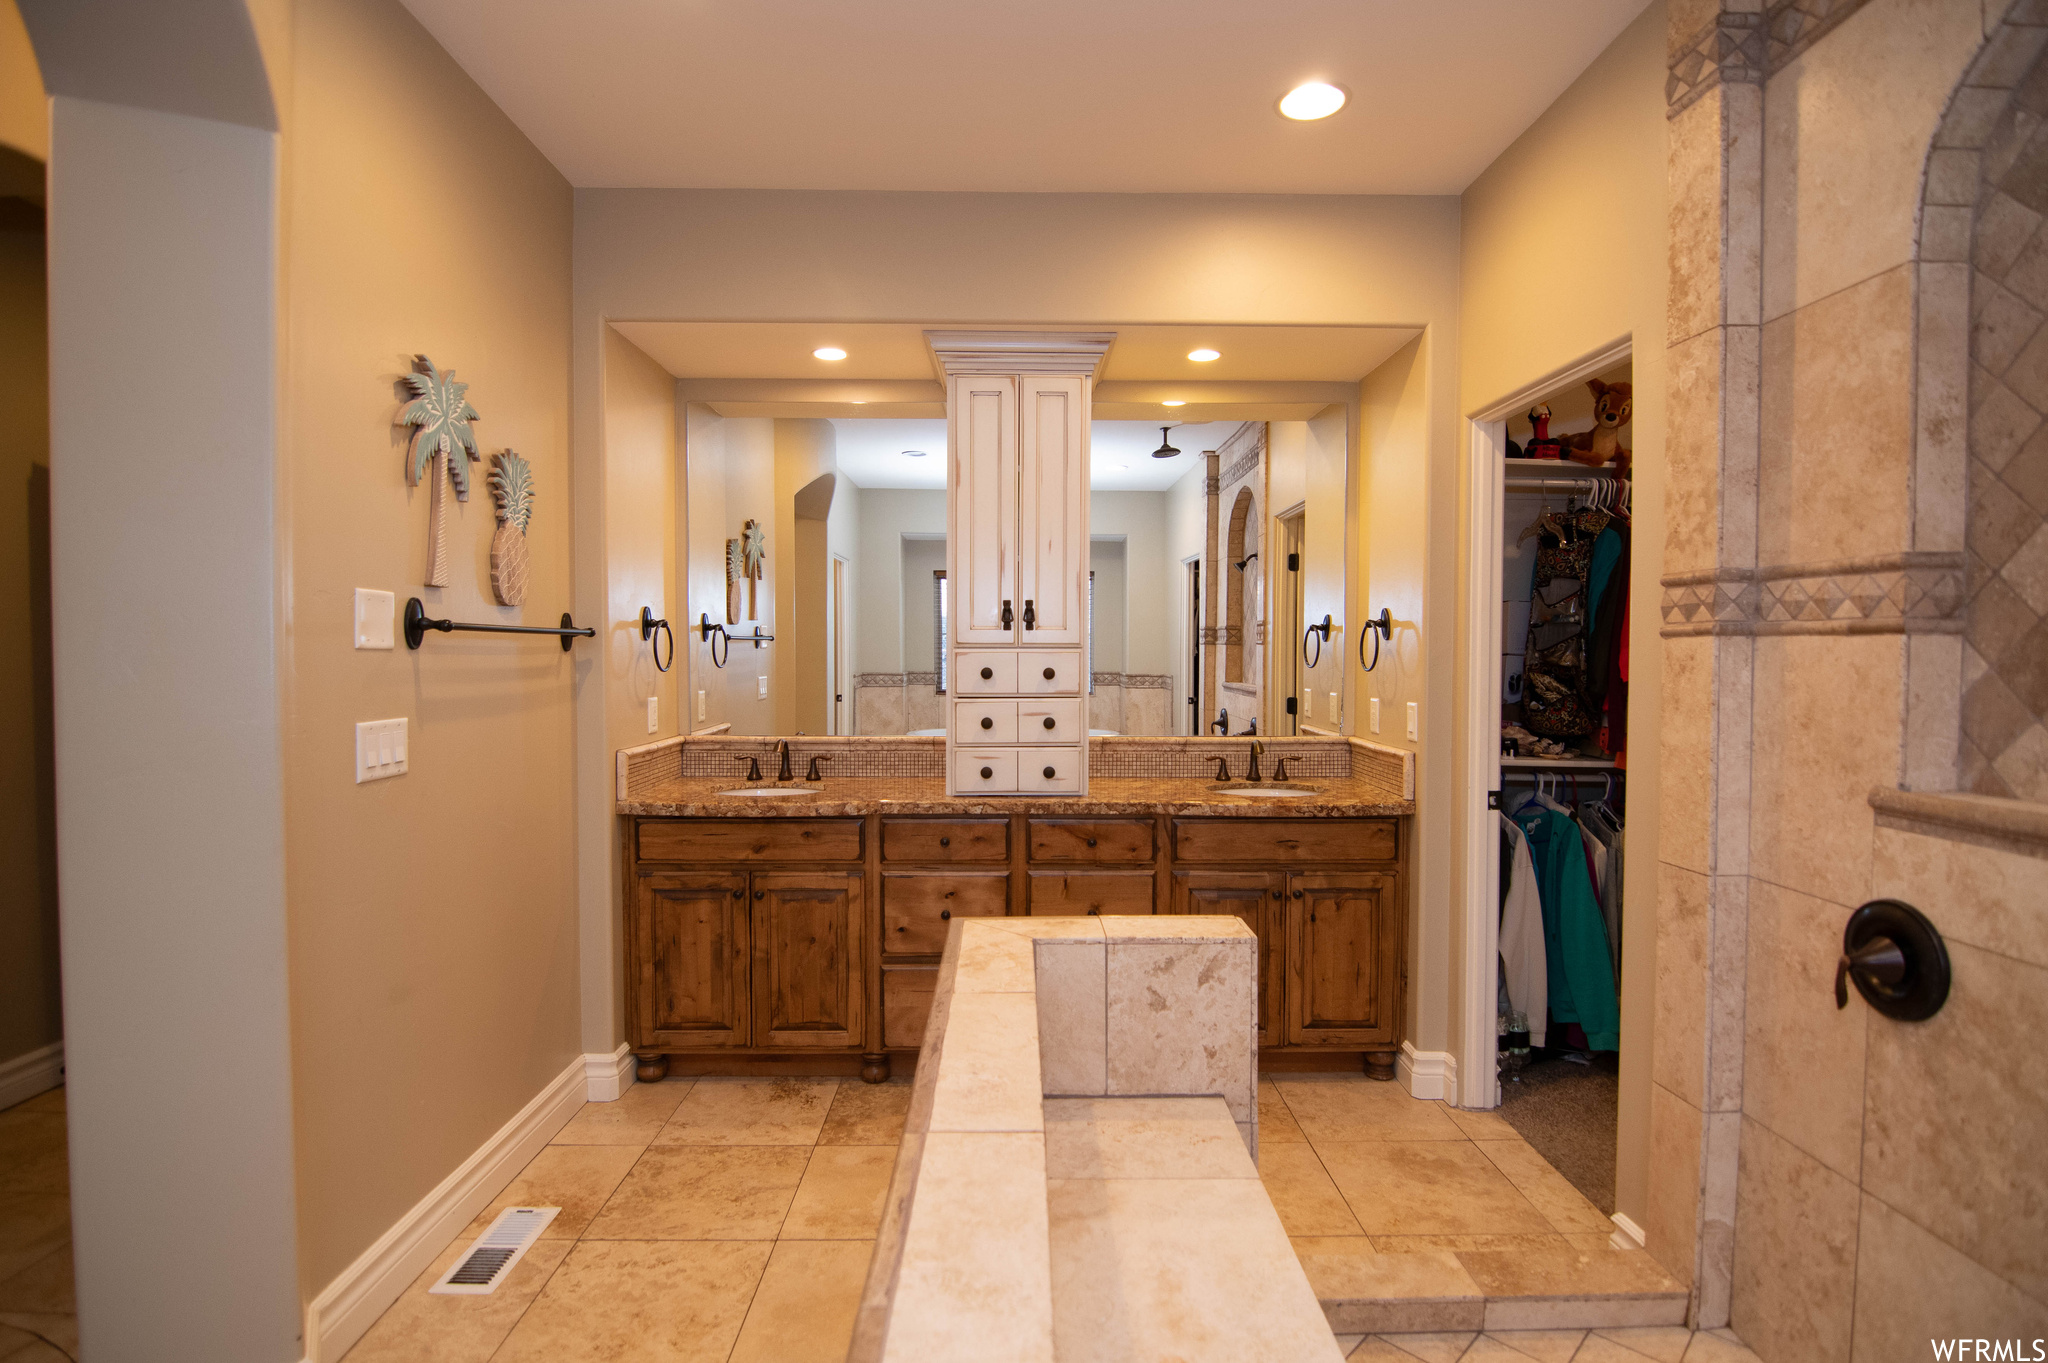 Bathroom with dual vanity, ornate columns, and tile flooring